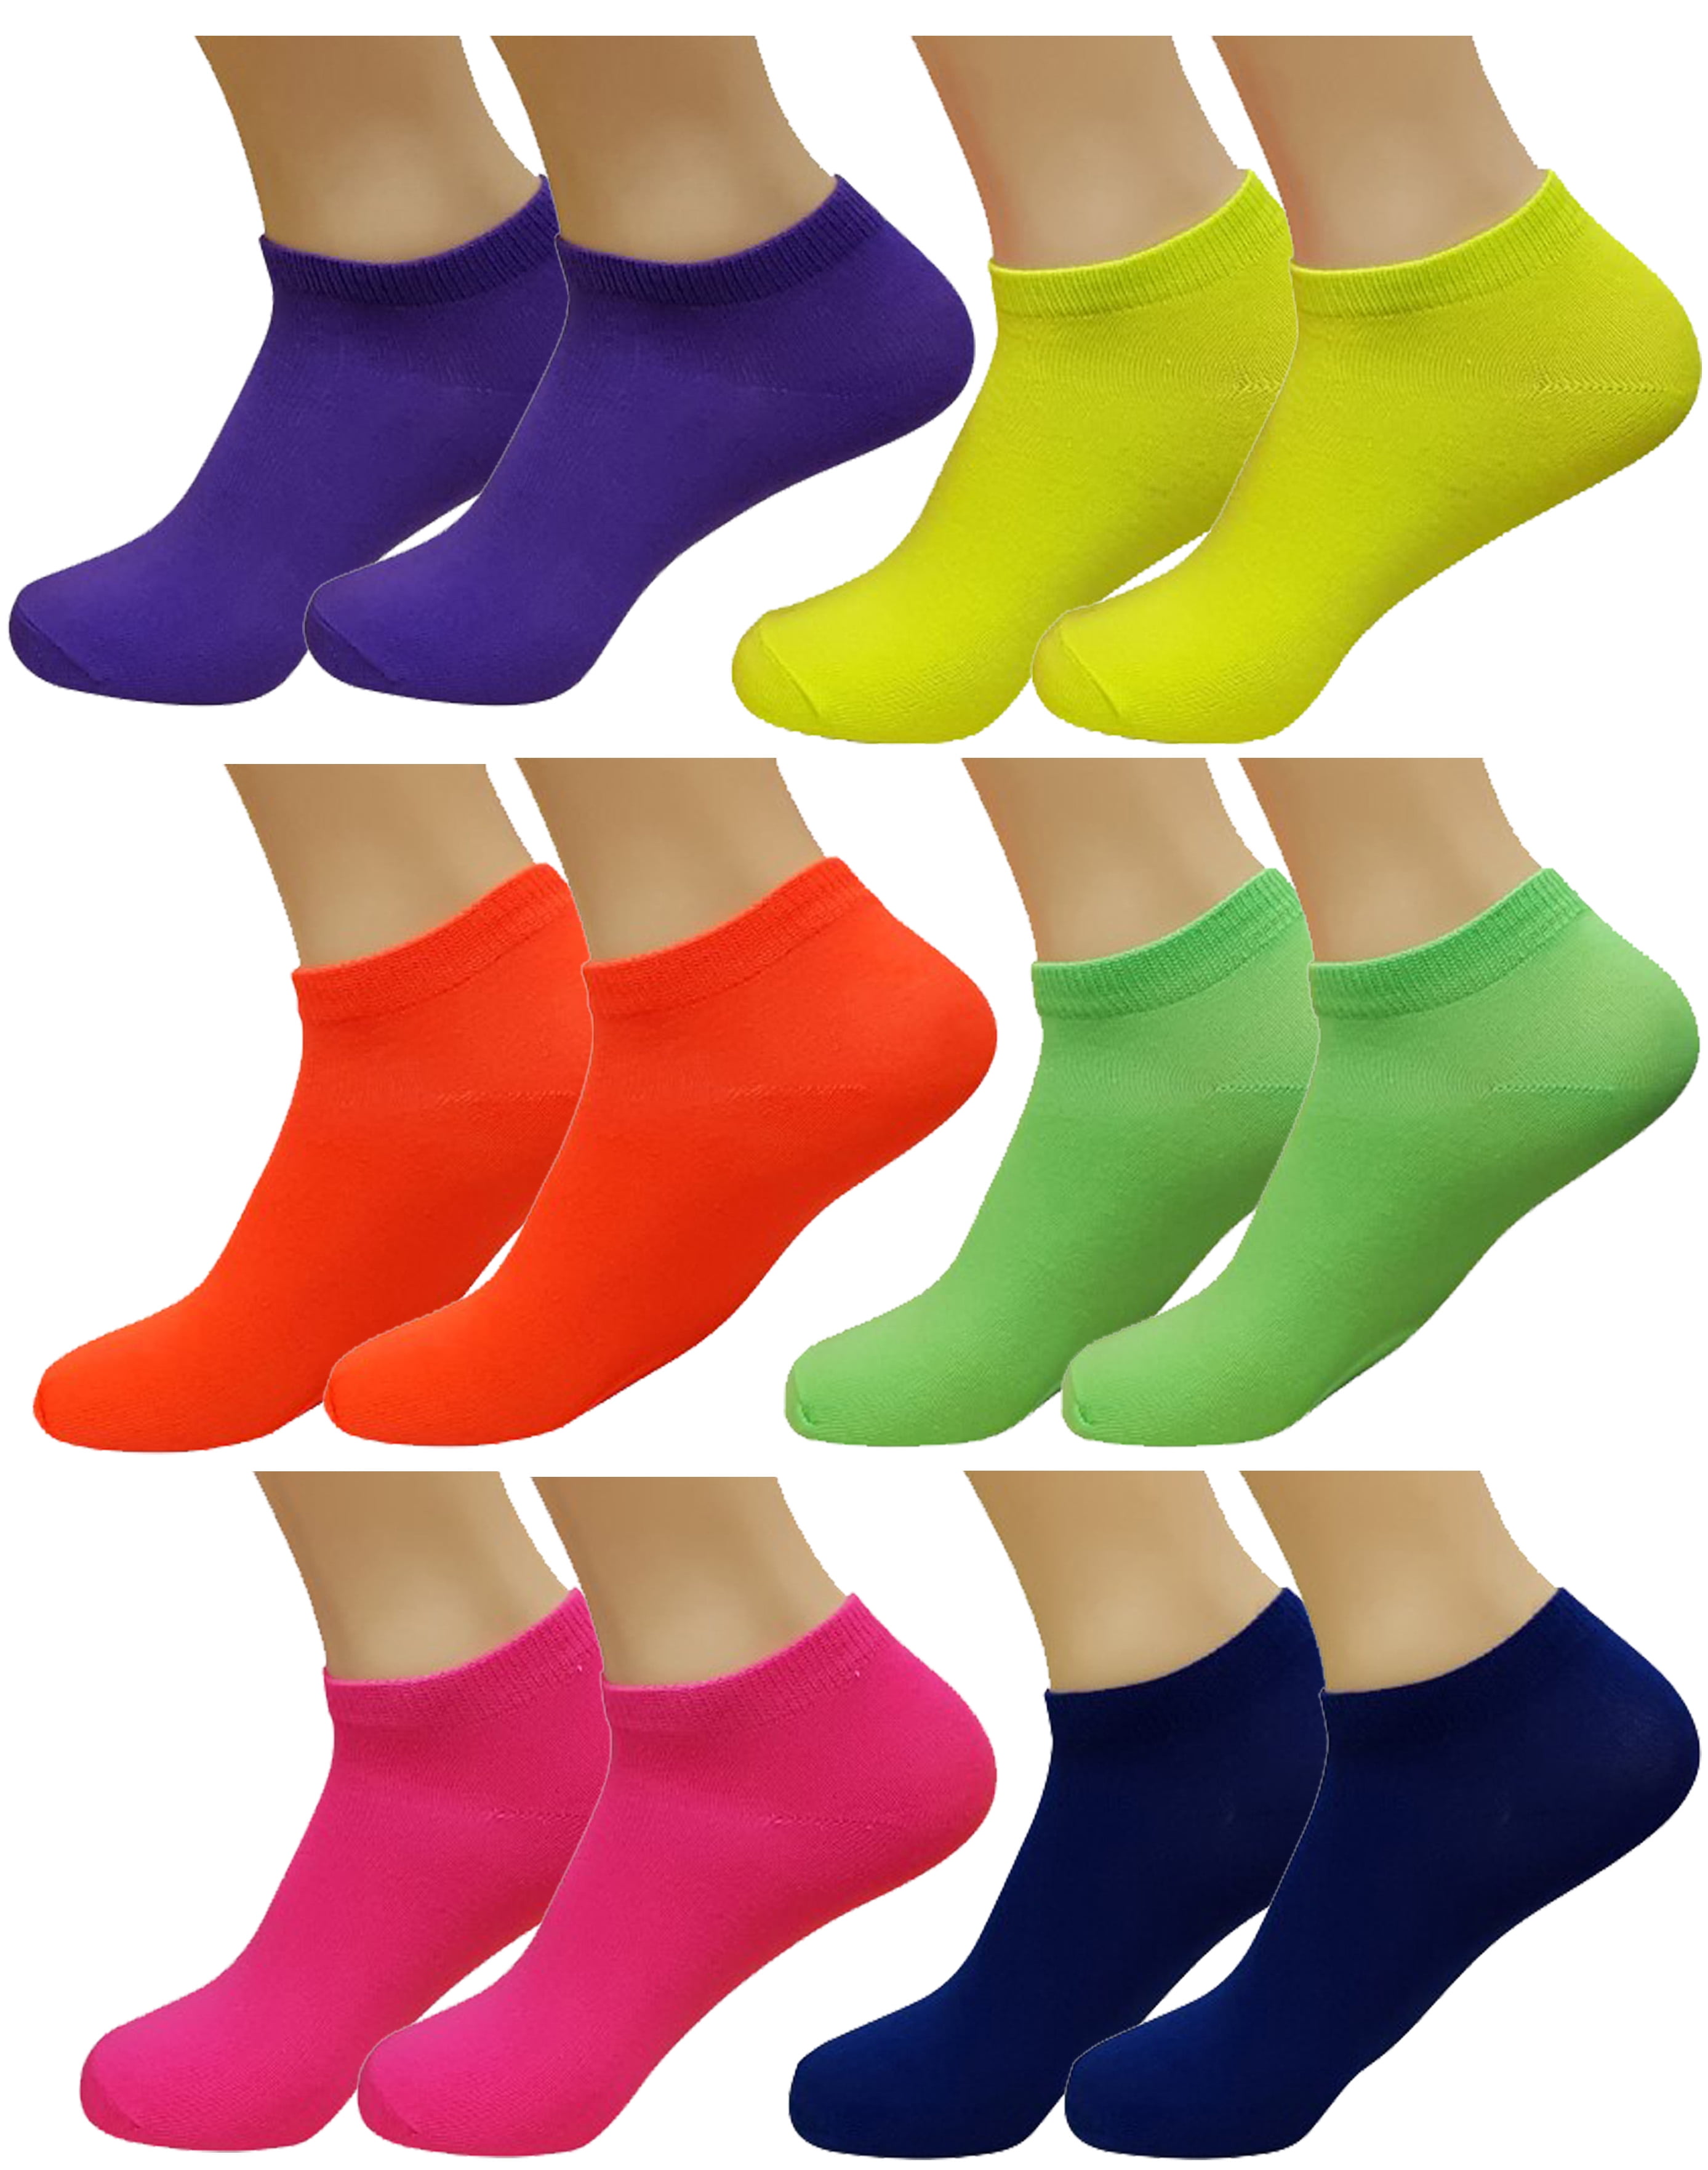 Debra Weitzner Womens Low Cut Ankle Socks No Show Colorful Pattern Fun Socks 12 Pair